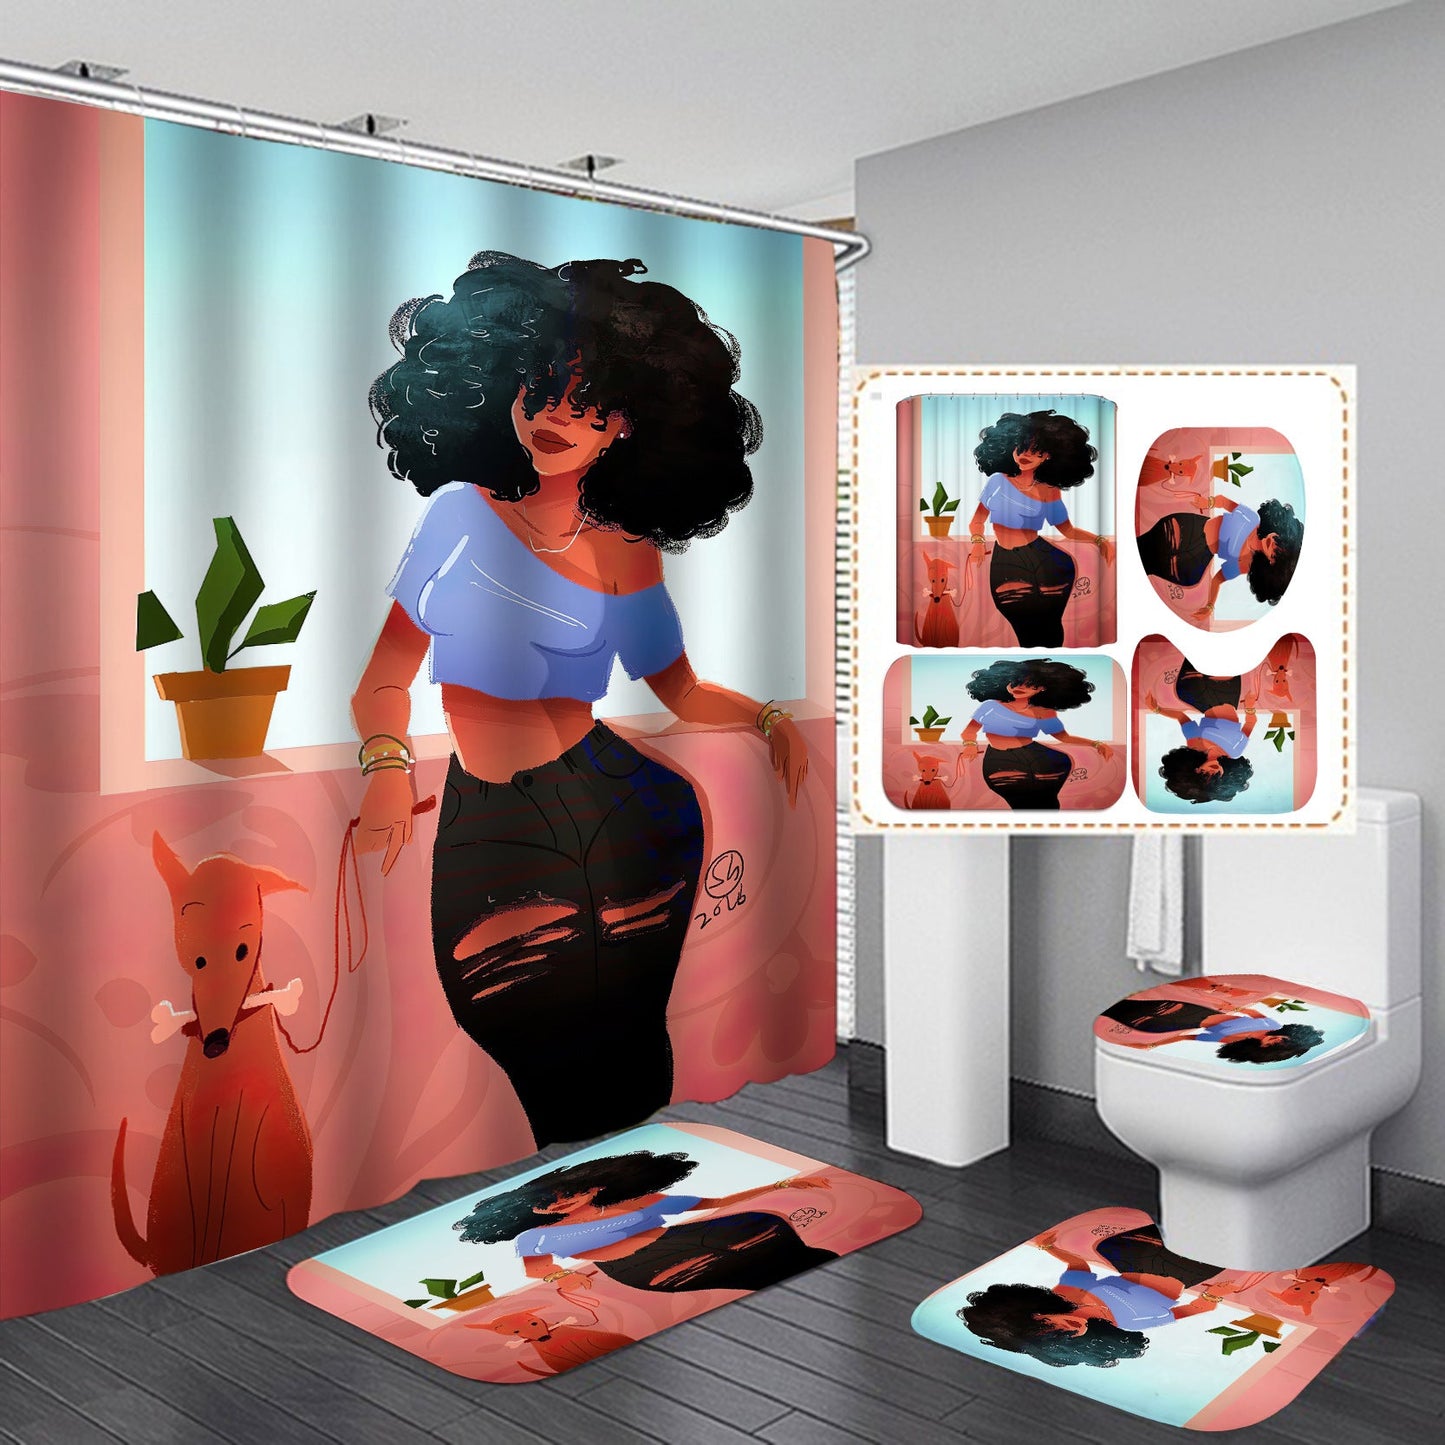 Beautiful Girl Design Shower Curtain Bathroom SetsNon-Slip Toilet Lid Cover